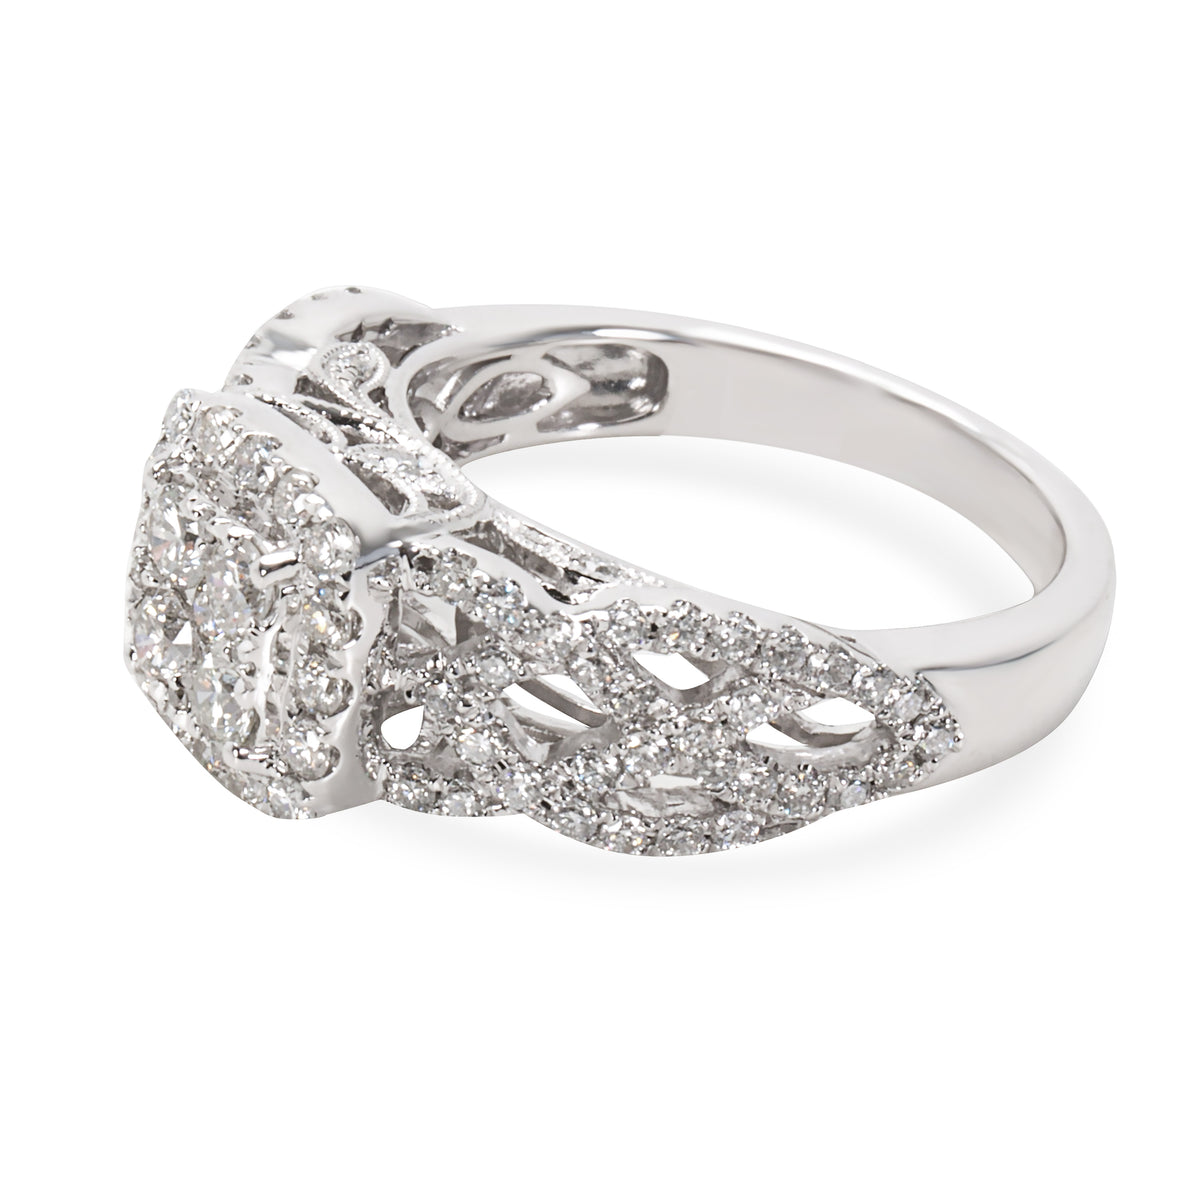 Diamond Engagement Ring in 14K White Gold (1.15 CTW)